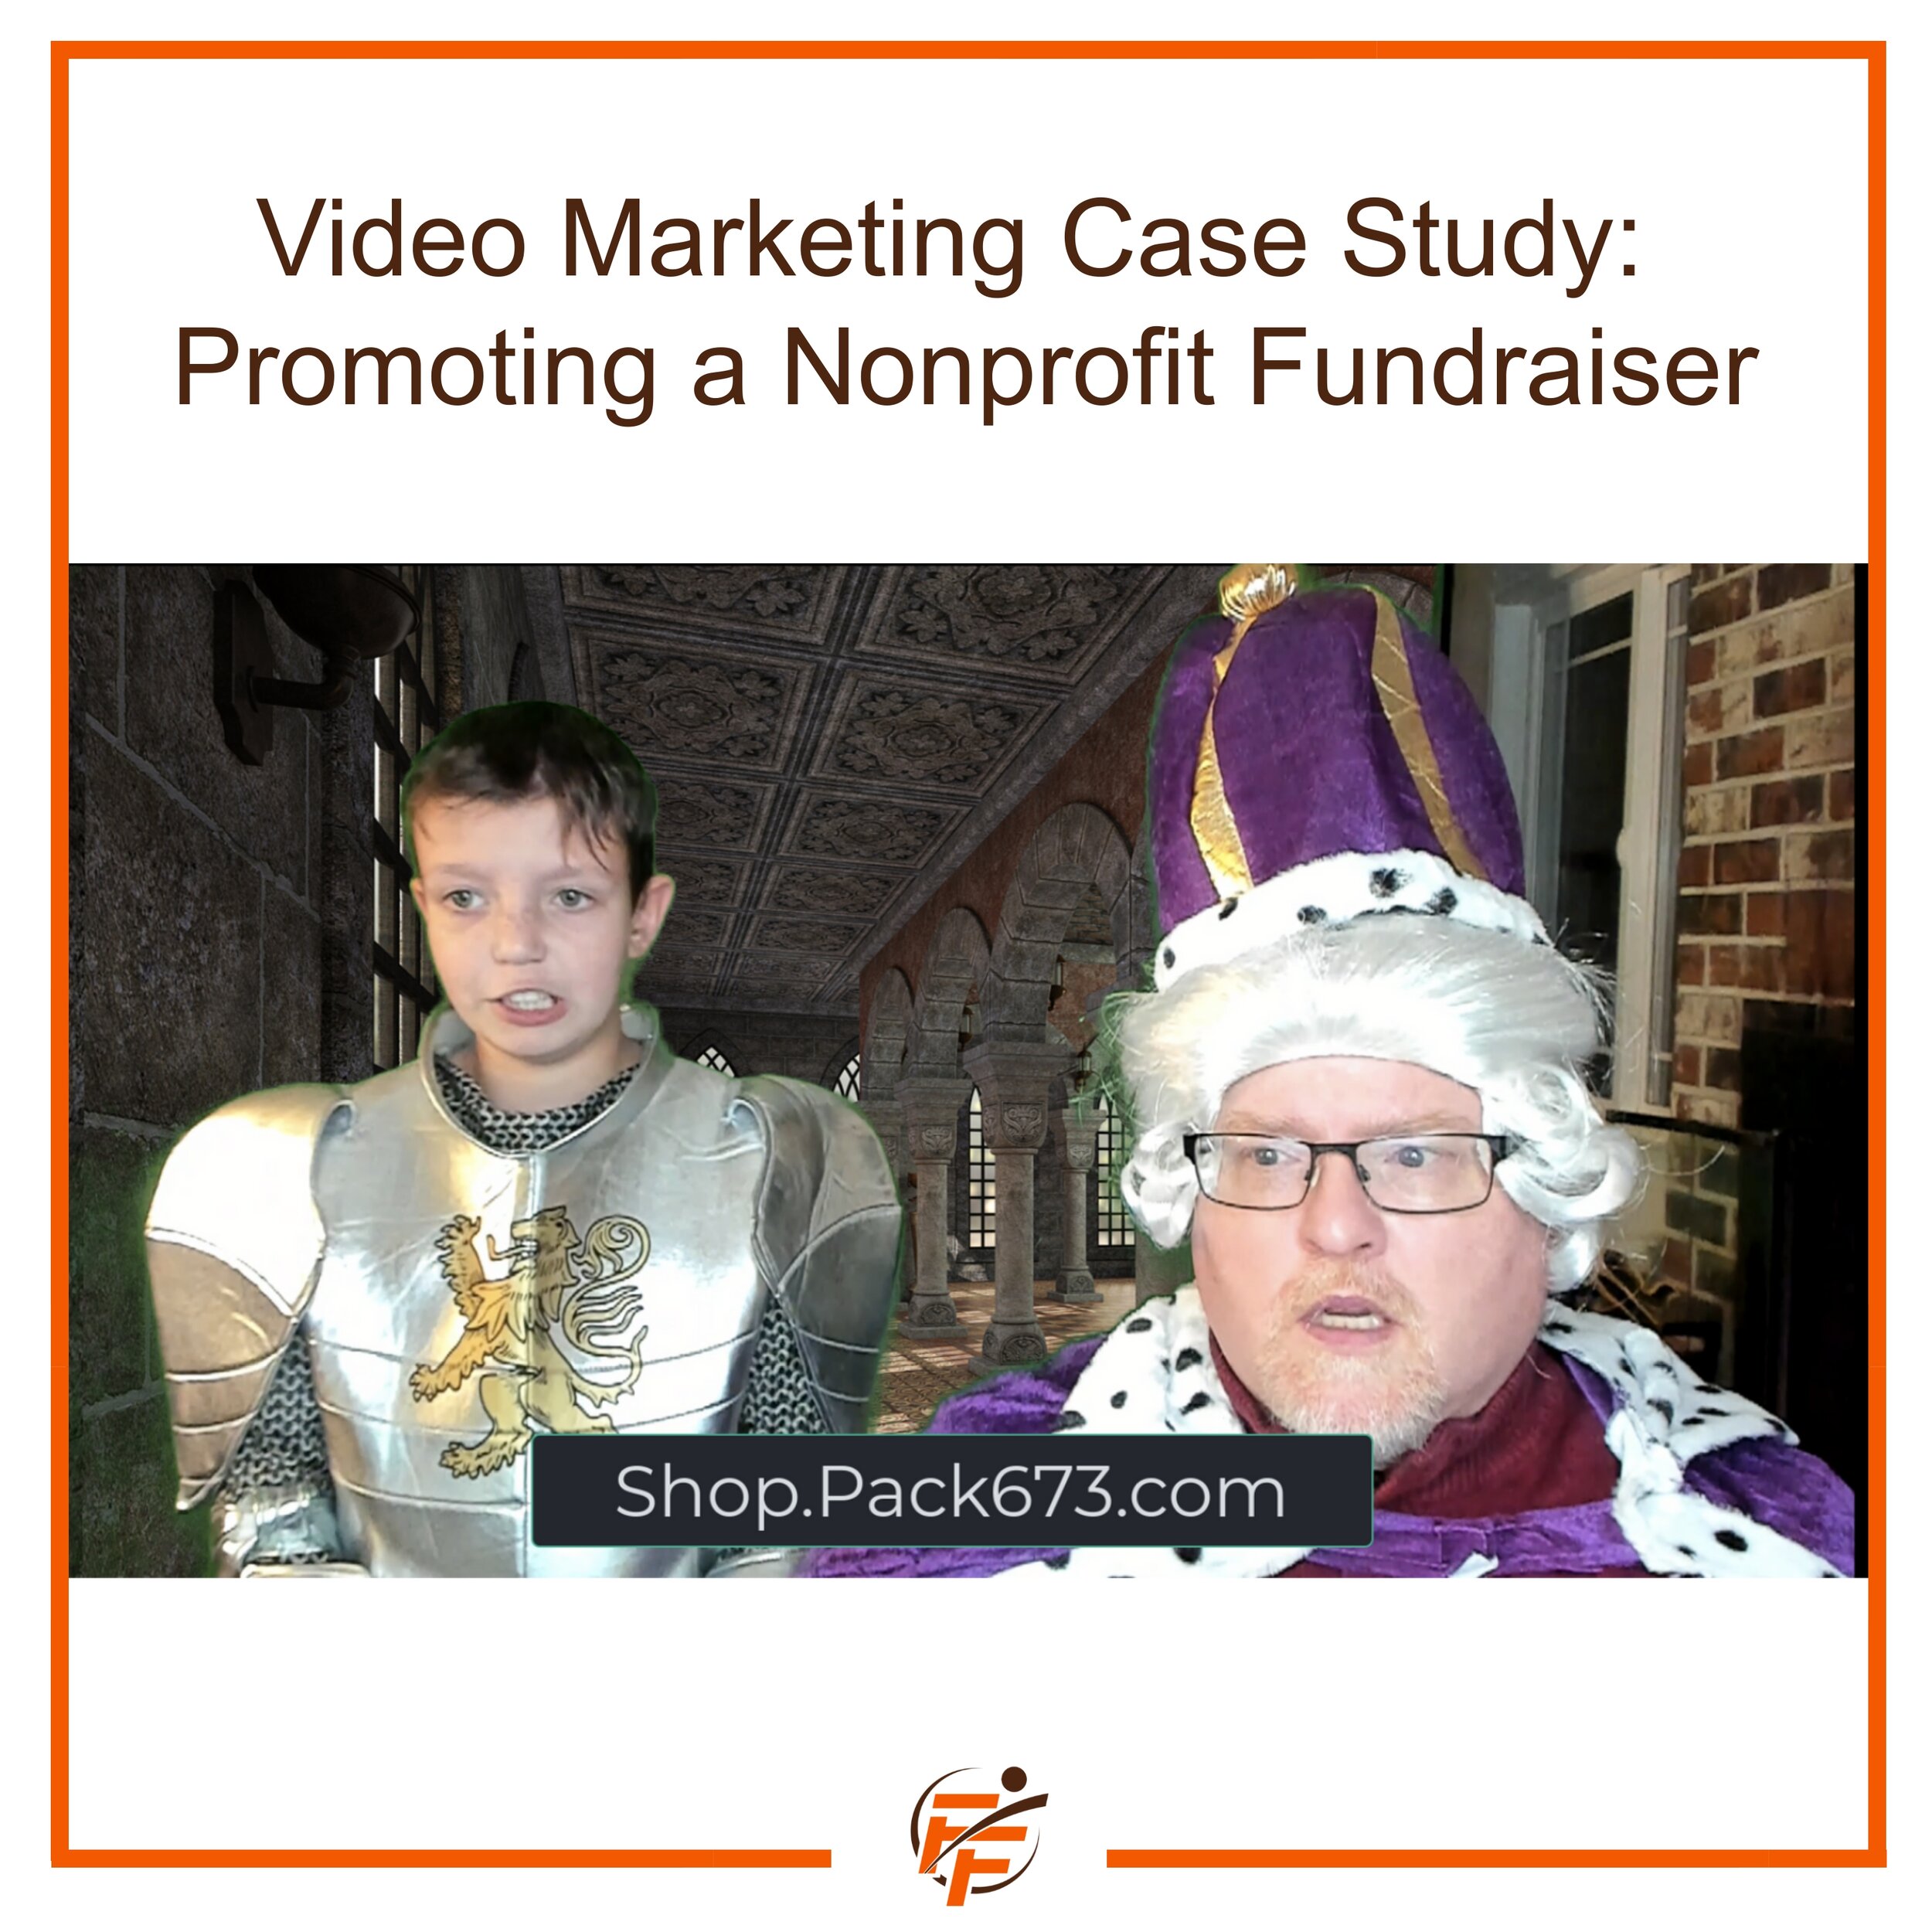 Video Marketing Case Study: Promoting a Nonprofit Fundraiser